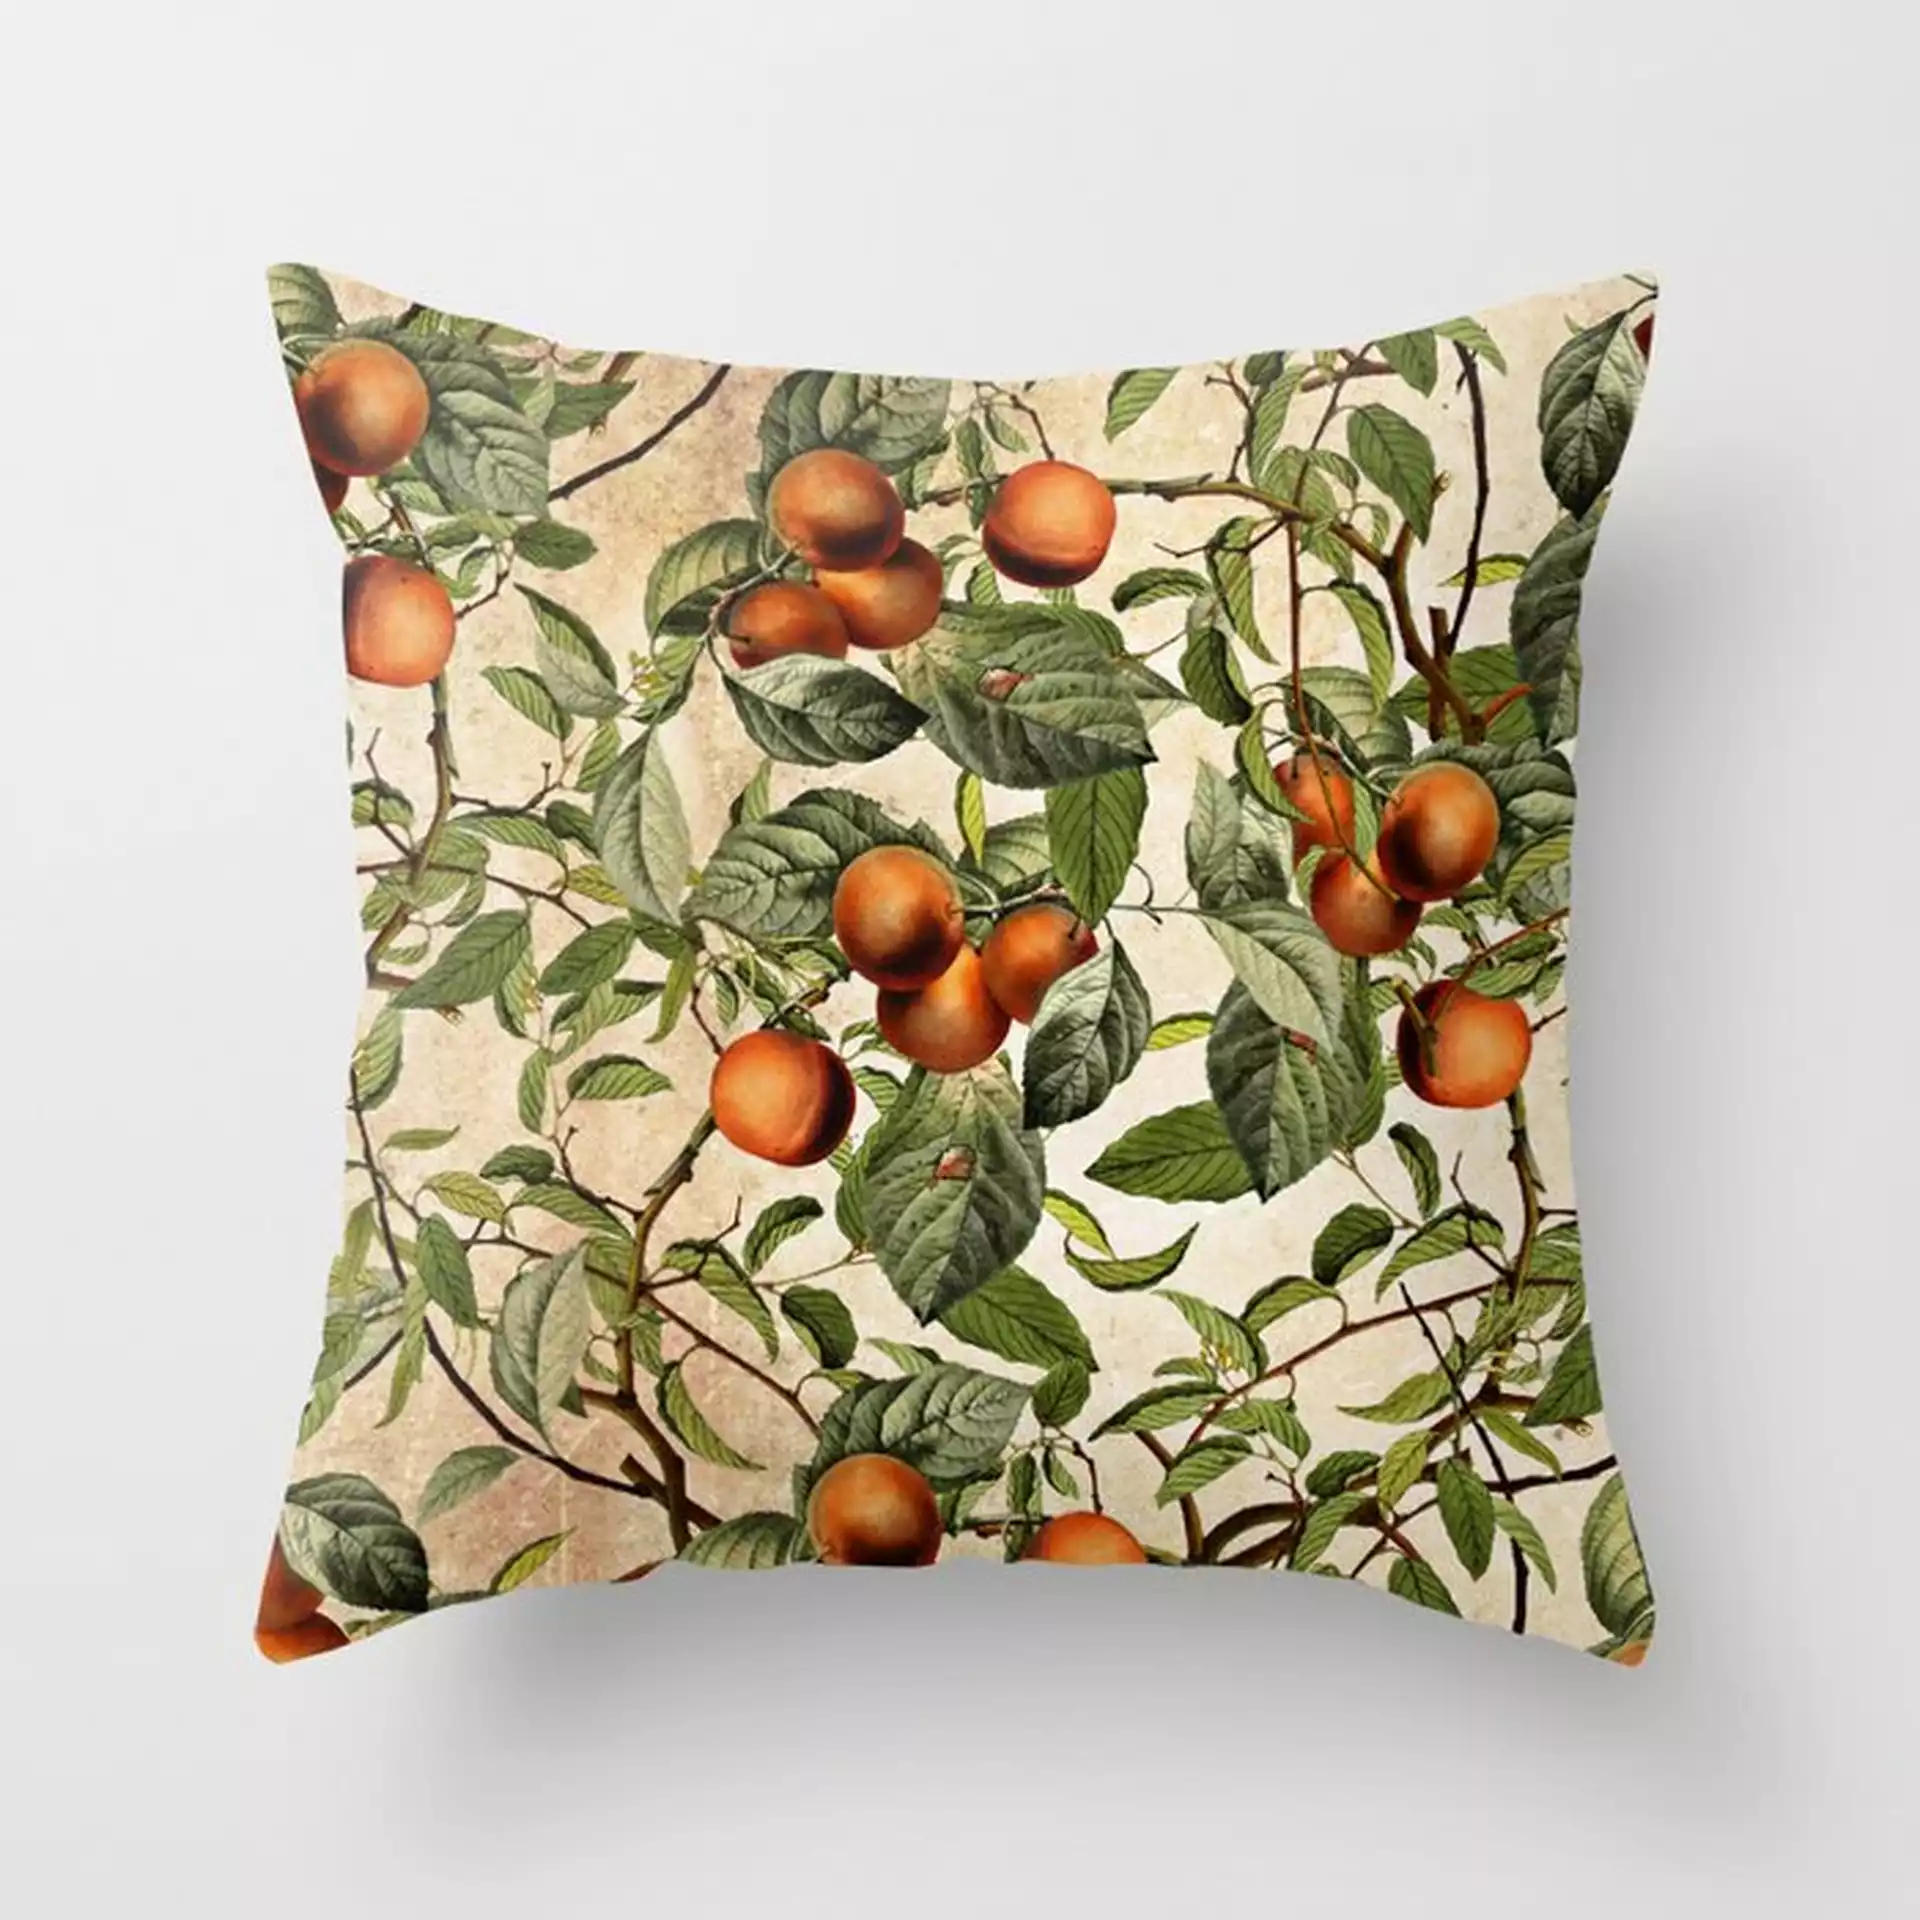 Vintage Fruit Pattern Couch Throw Pillow by Burcu Korkmazyurek - Cover (20" x 20") with pillow insert - Outdoor Pillow